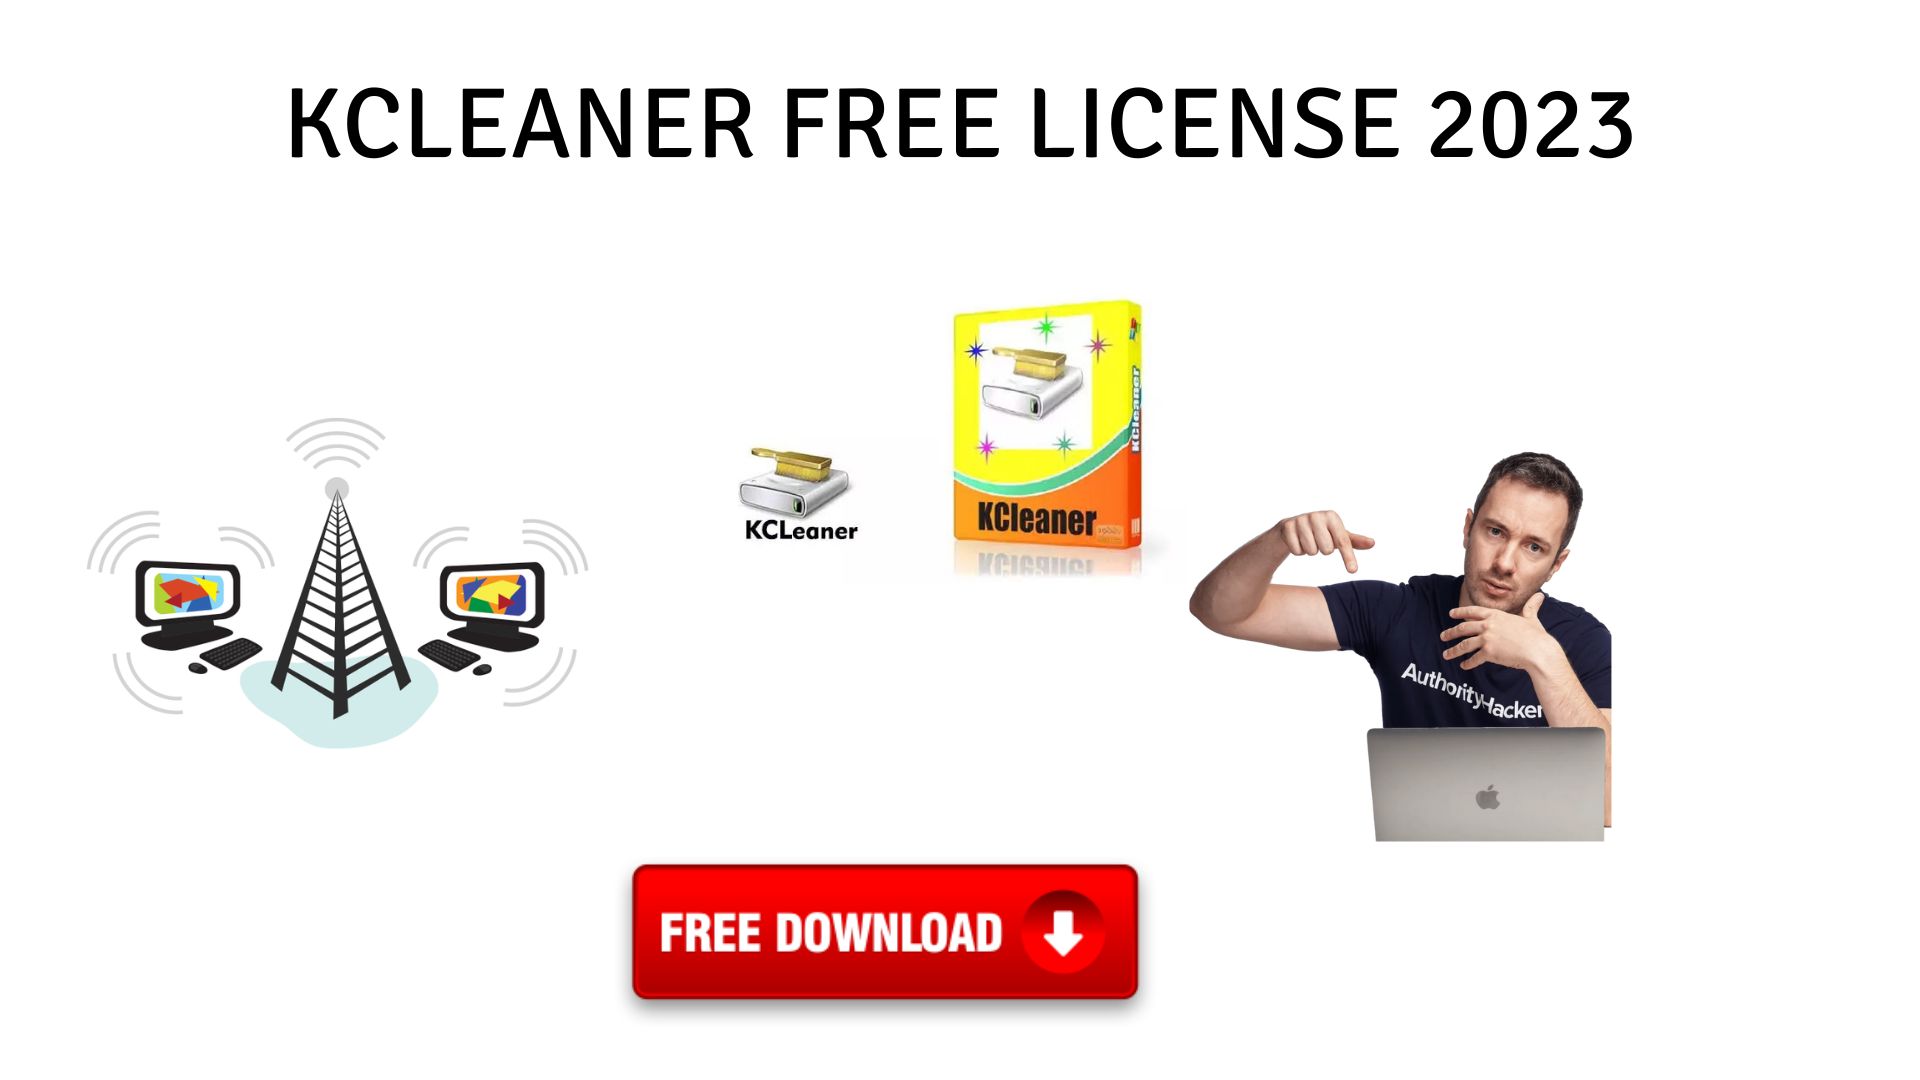 Kcleaner free license 2023